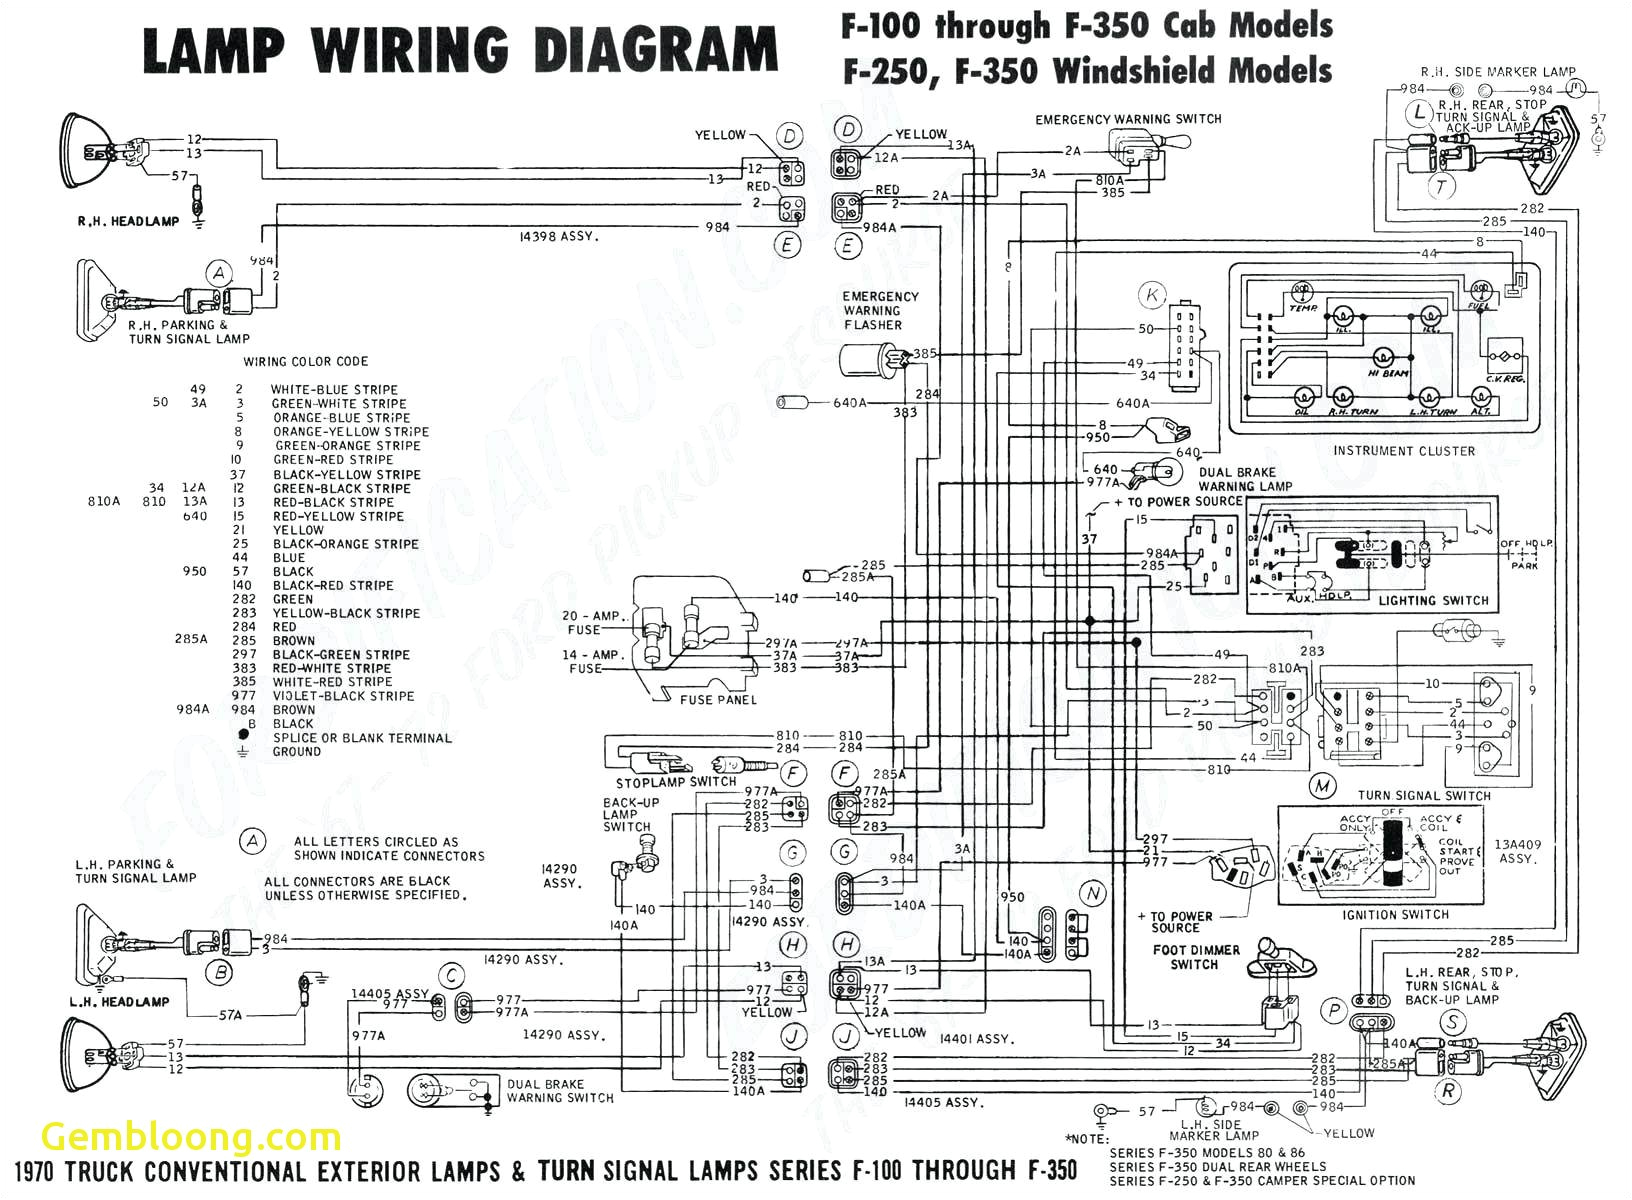 Daylight Running Lights Wiring Diagram Dimmer Wiring Led Rider Wiring Diagram Center